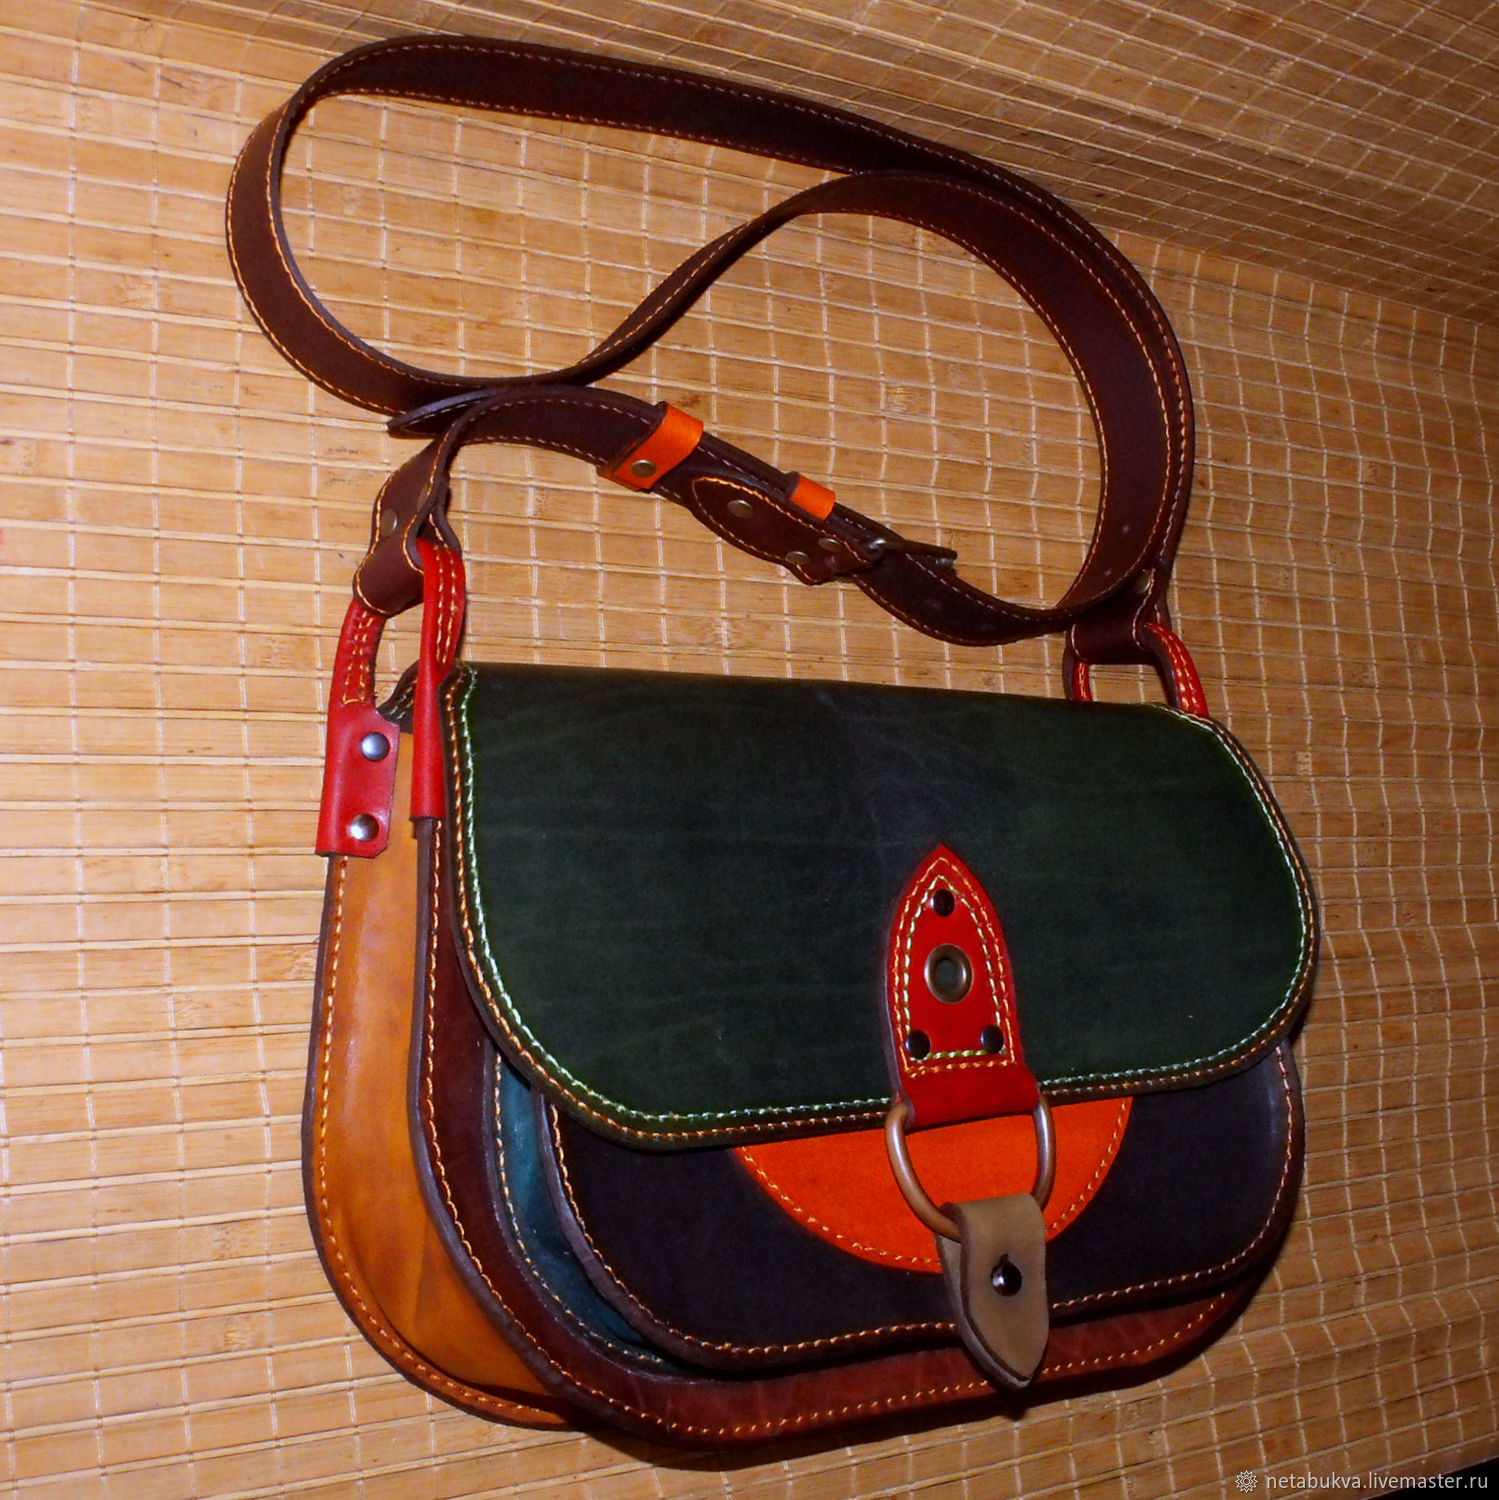 Leather bag 'JAGDTASH URBAN' multicolored, Classic Bag, Moscow,  Фото №1